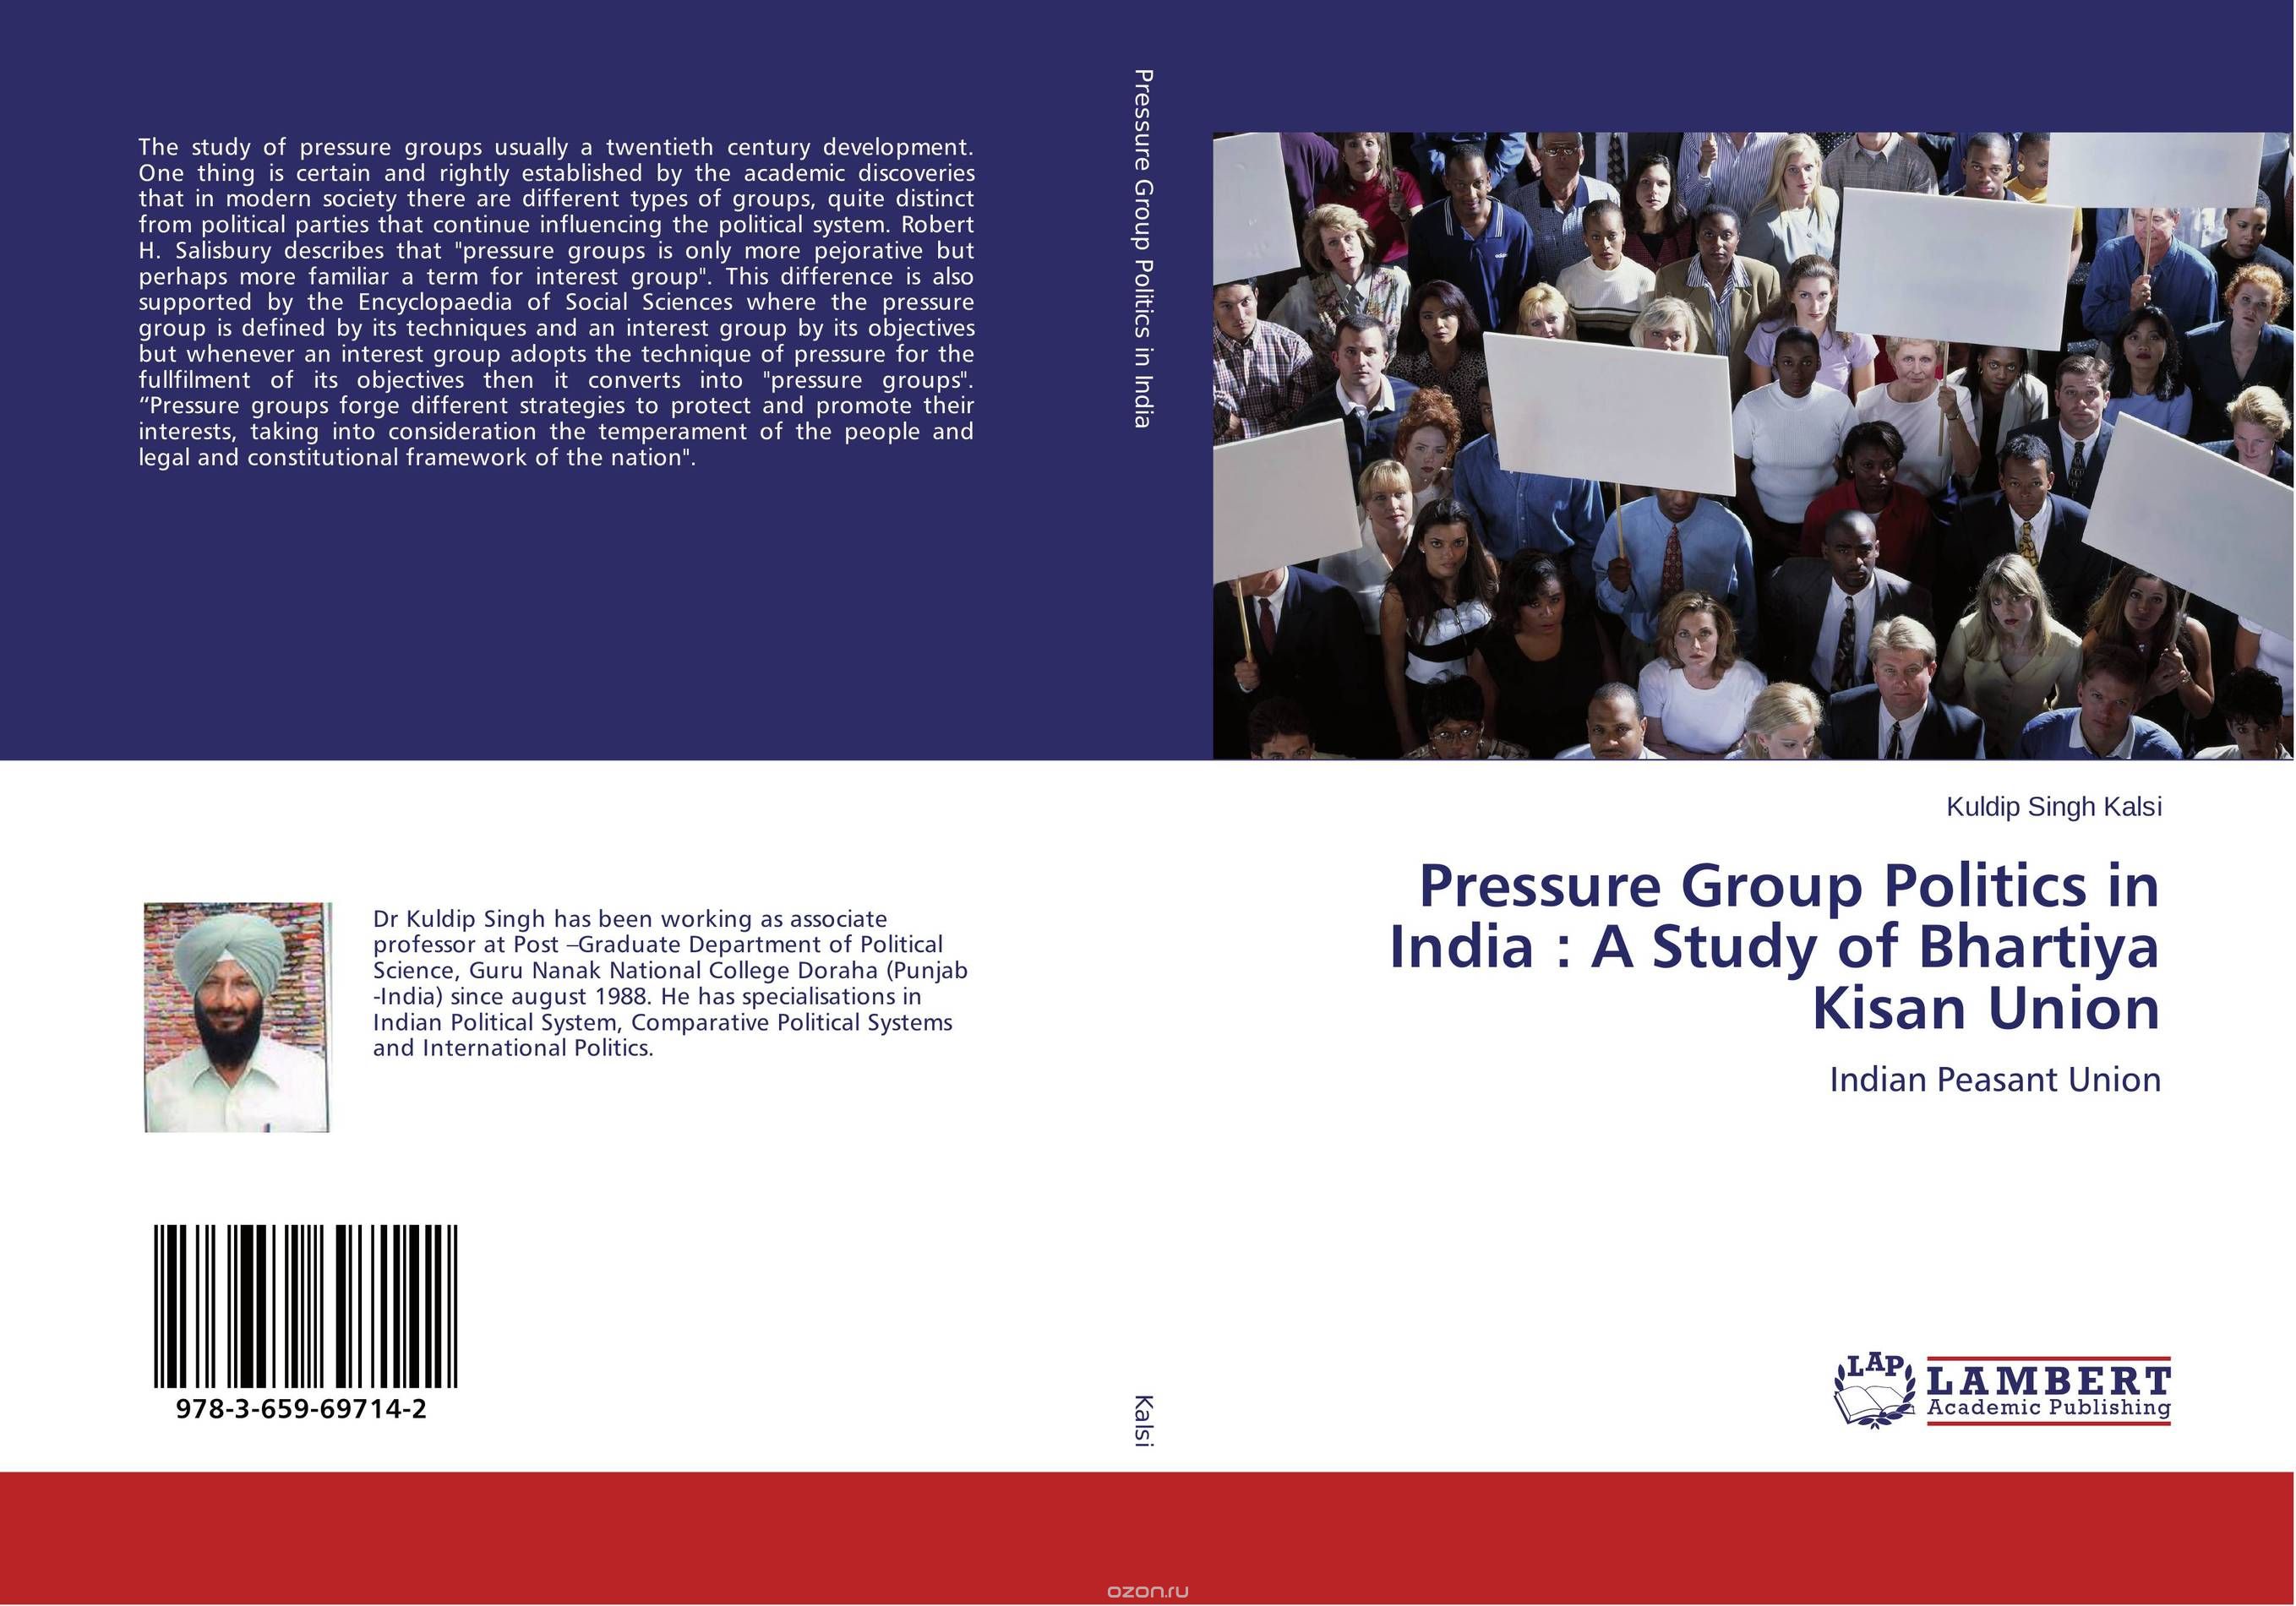 Скачать книгу "Pressure Group Politics in India : A Study of Bhartiya Kisan Union"